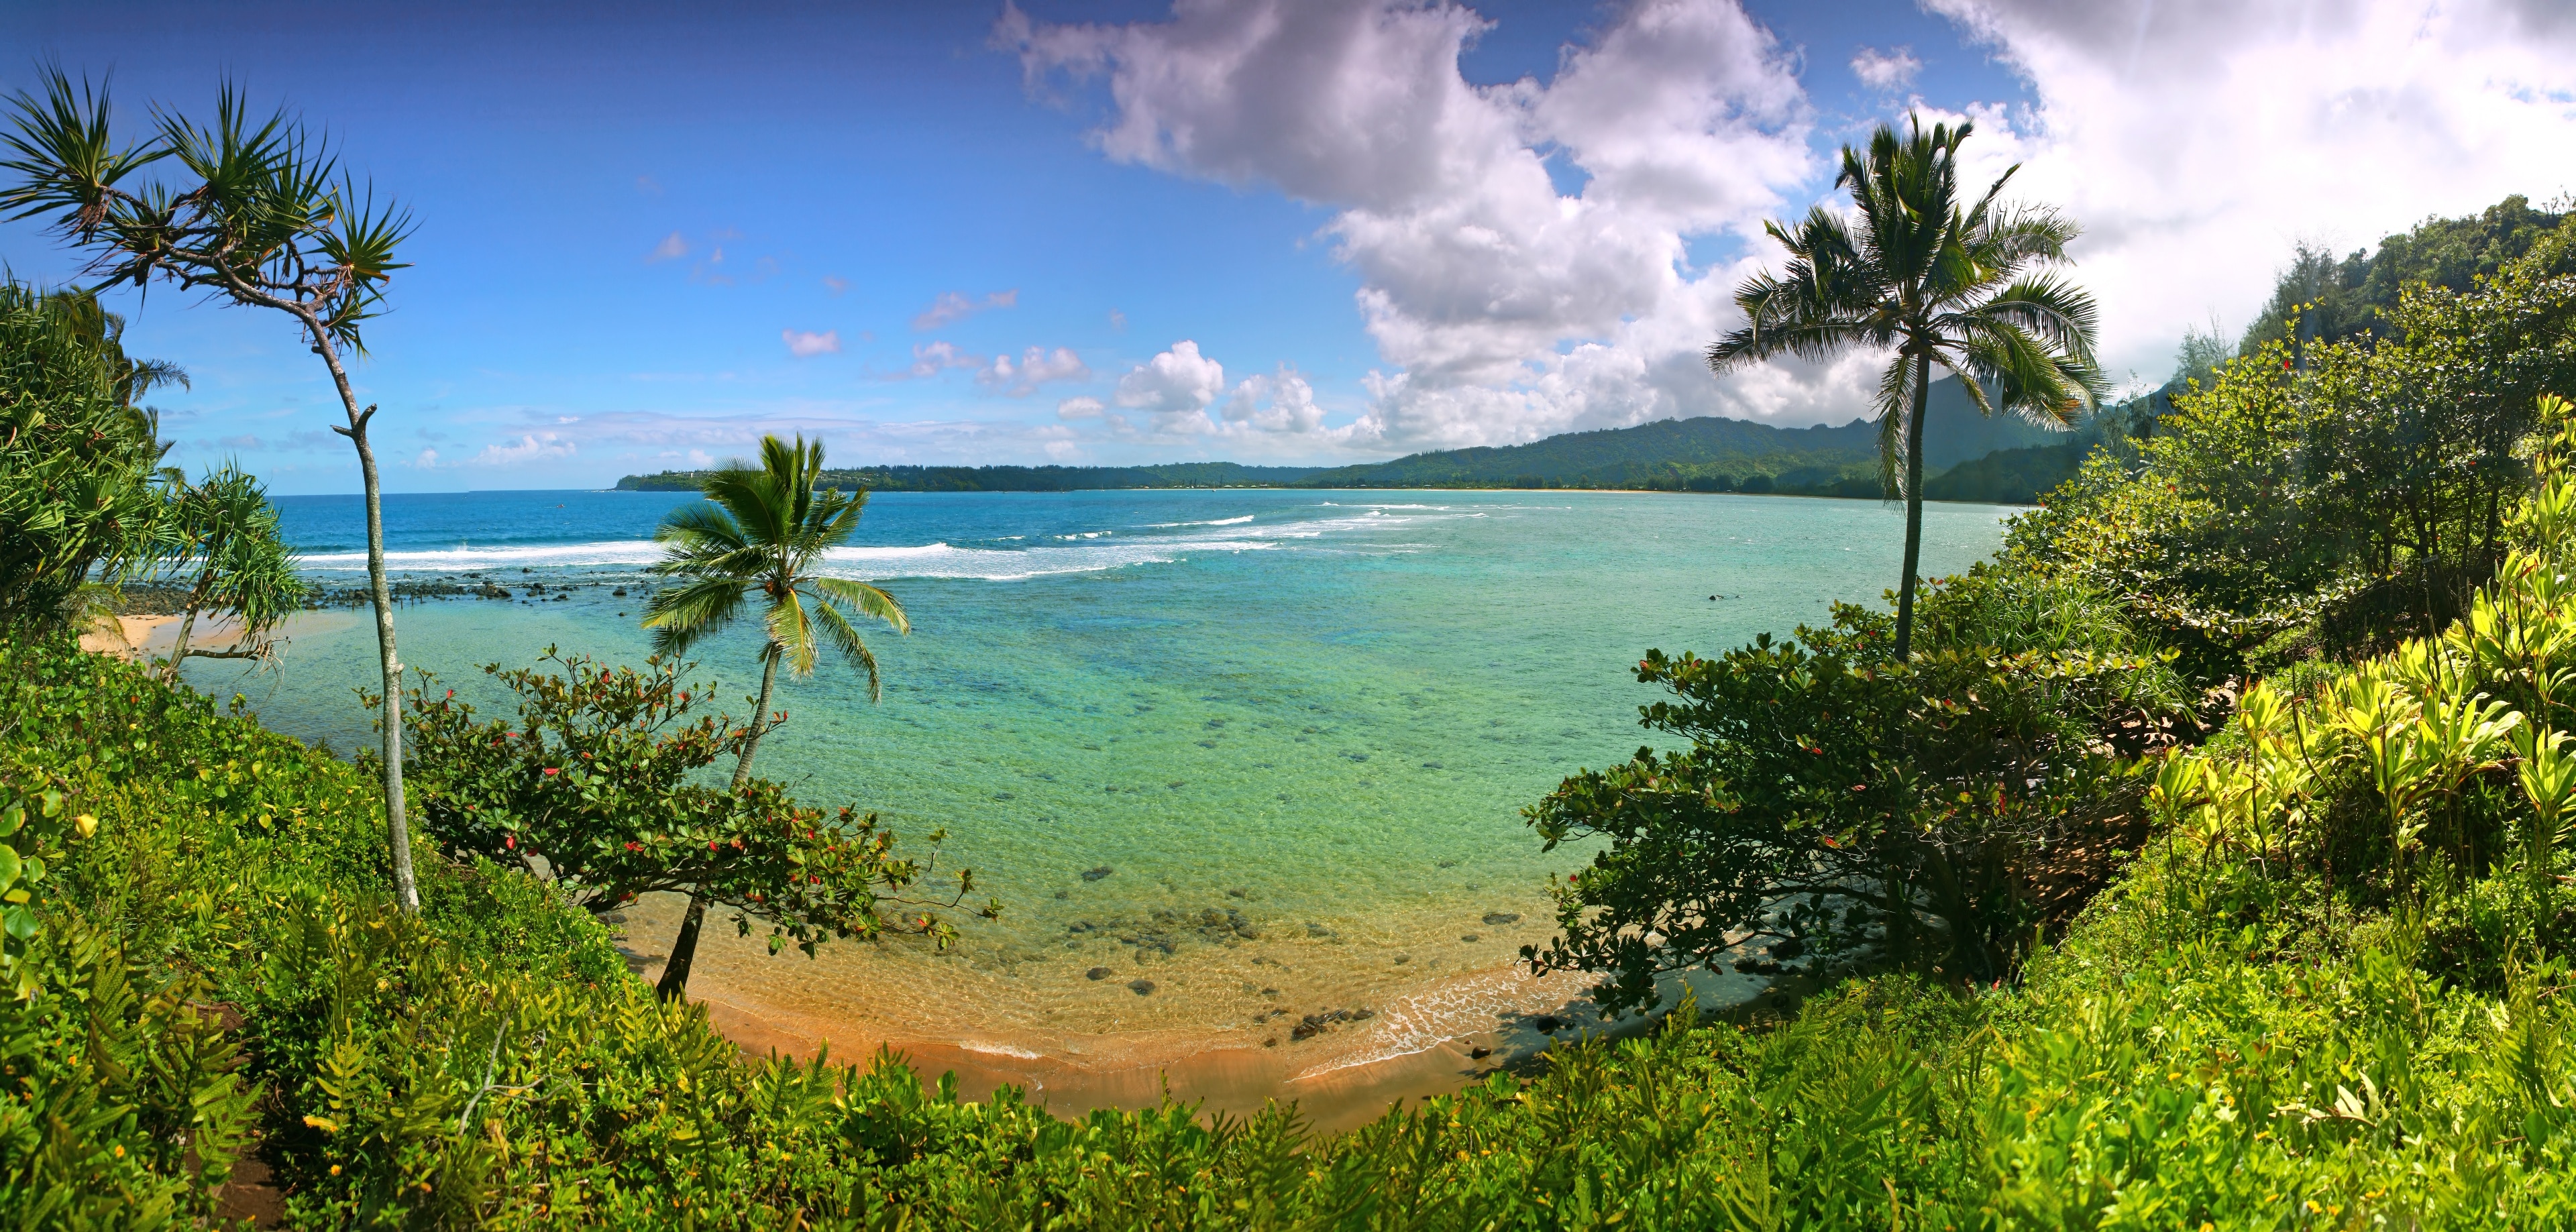 Royal Coconut Coast, Hawaii, United States of America